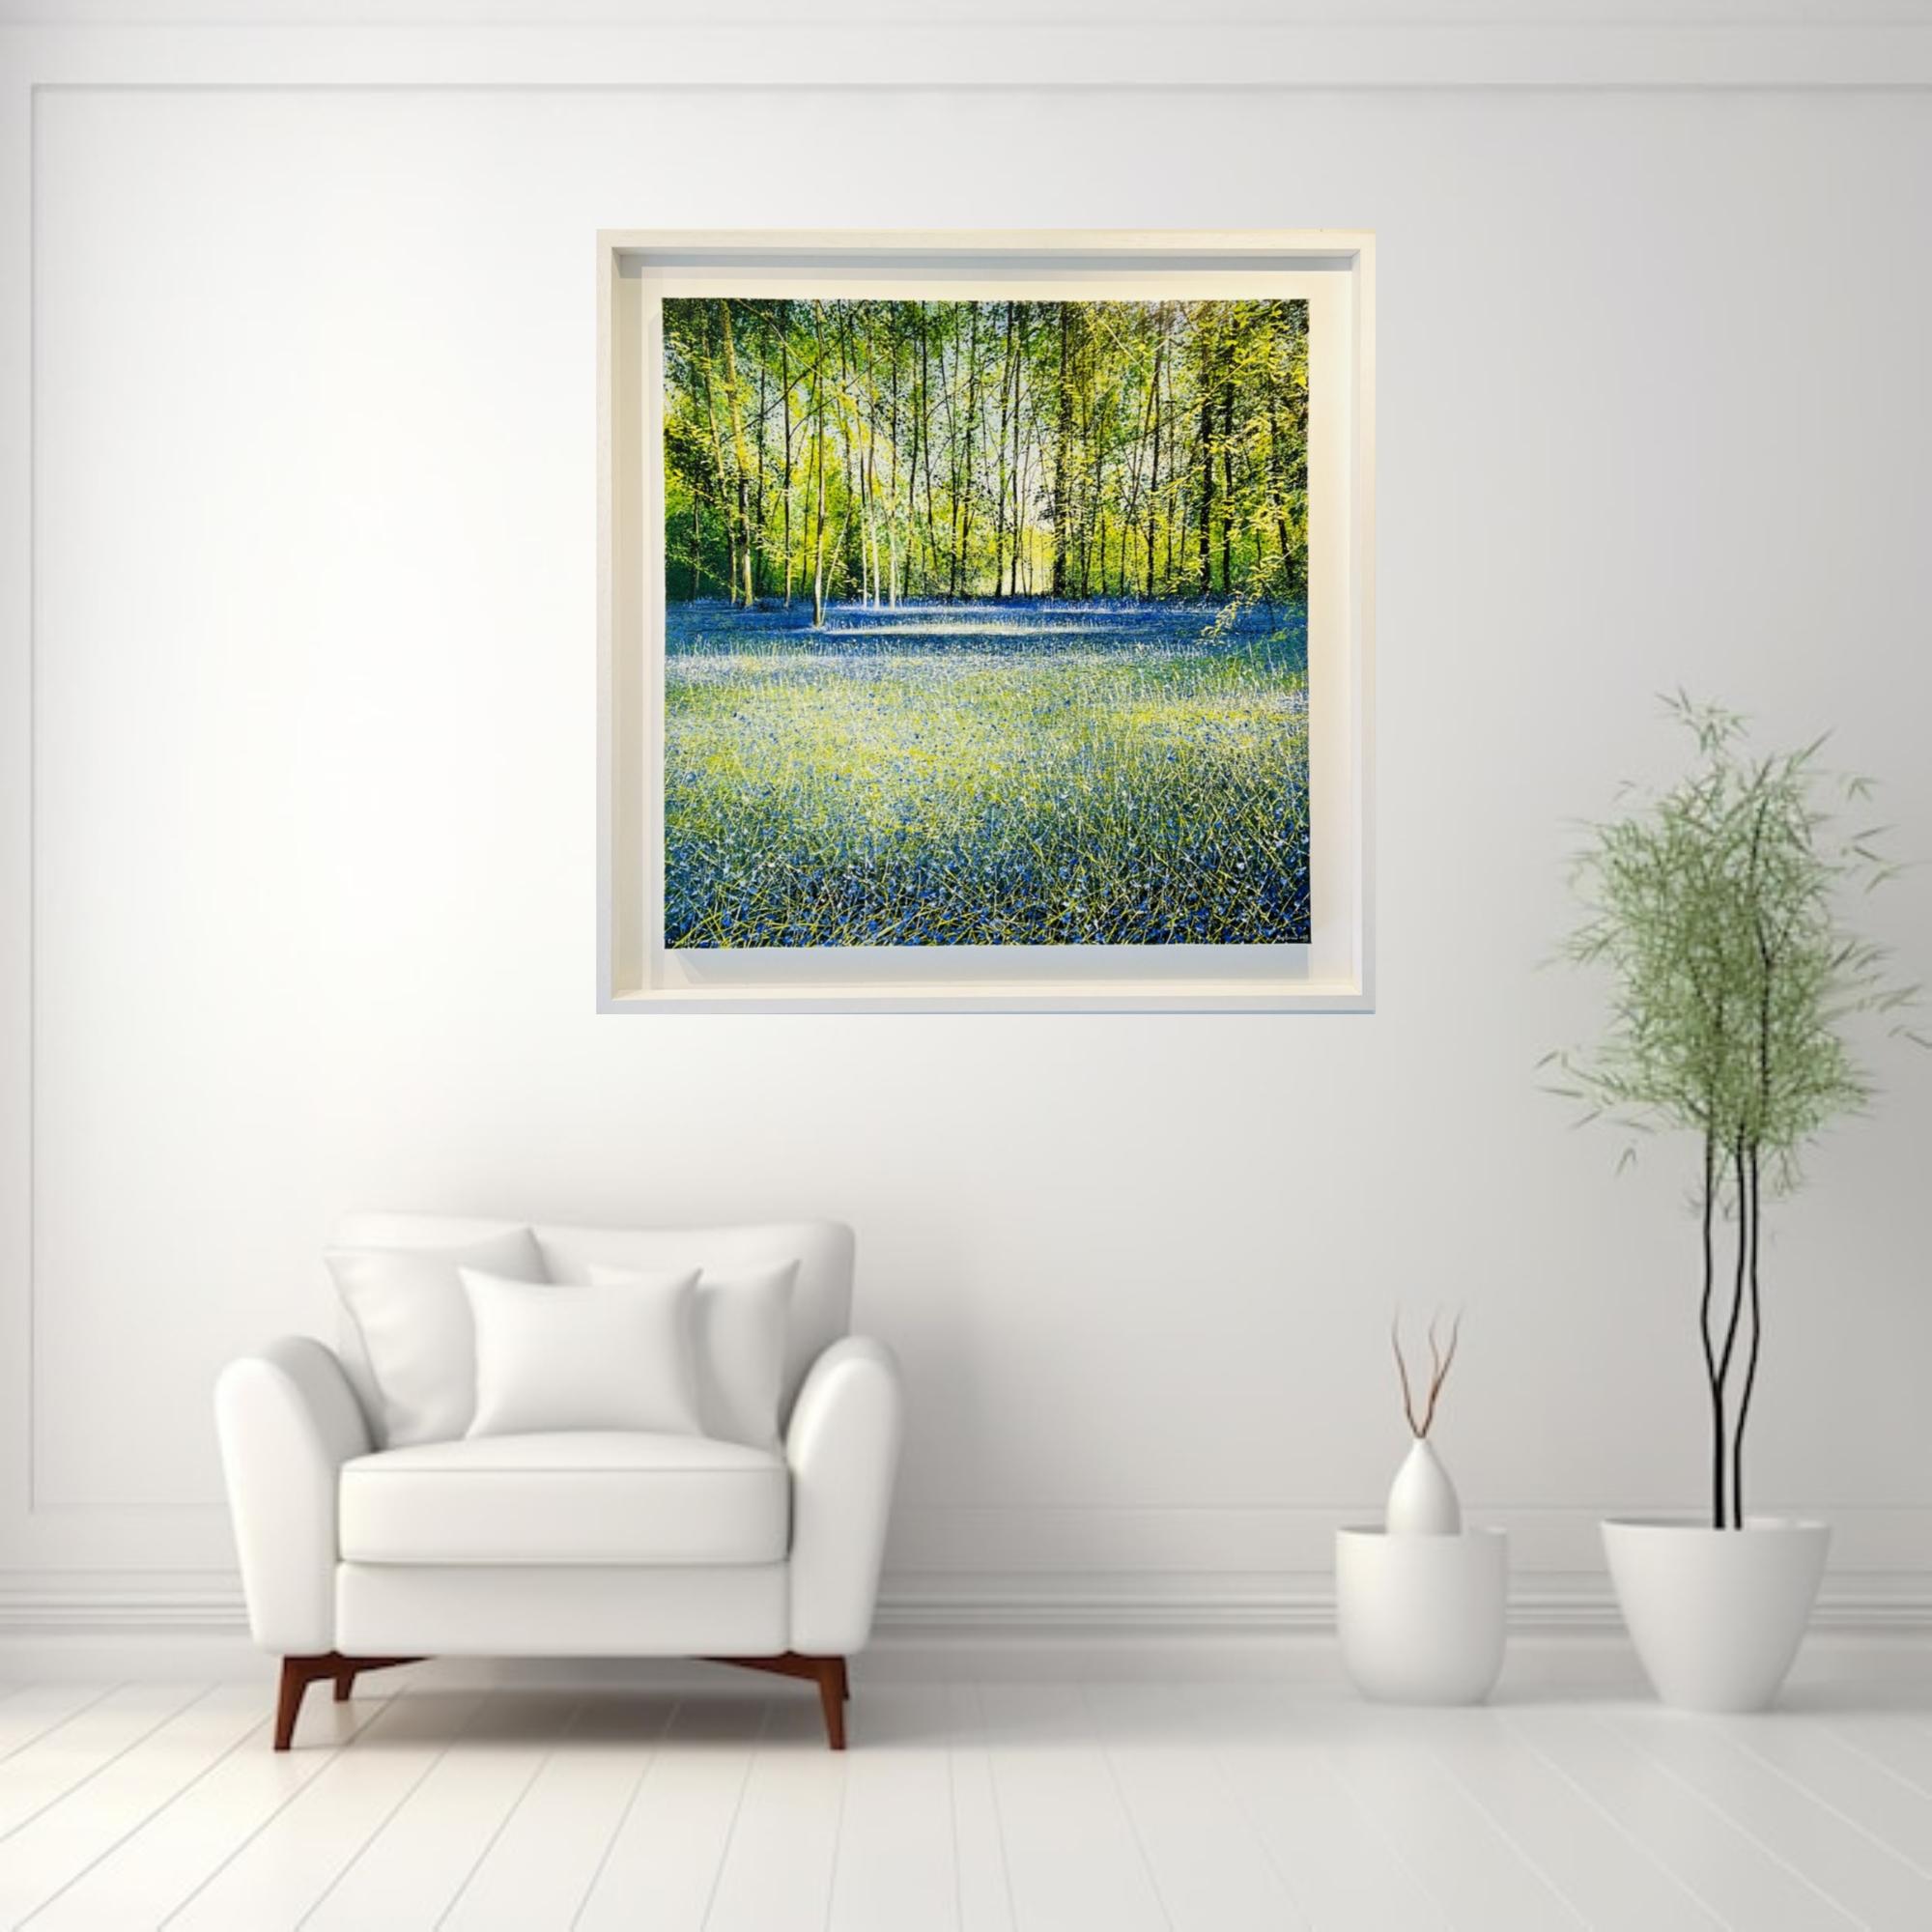 Bluebell Woods - landscape painting, original floral woodland realism For Sale 1